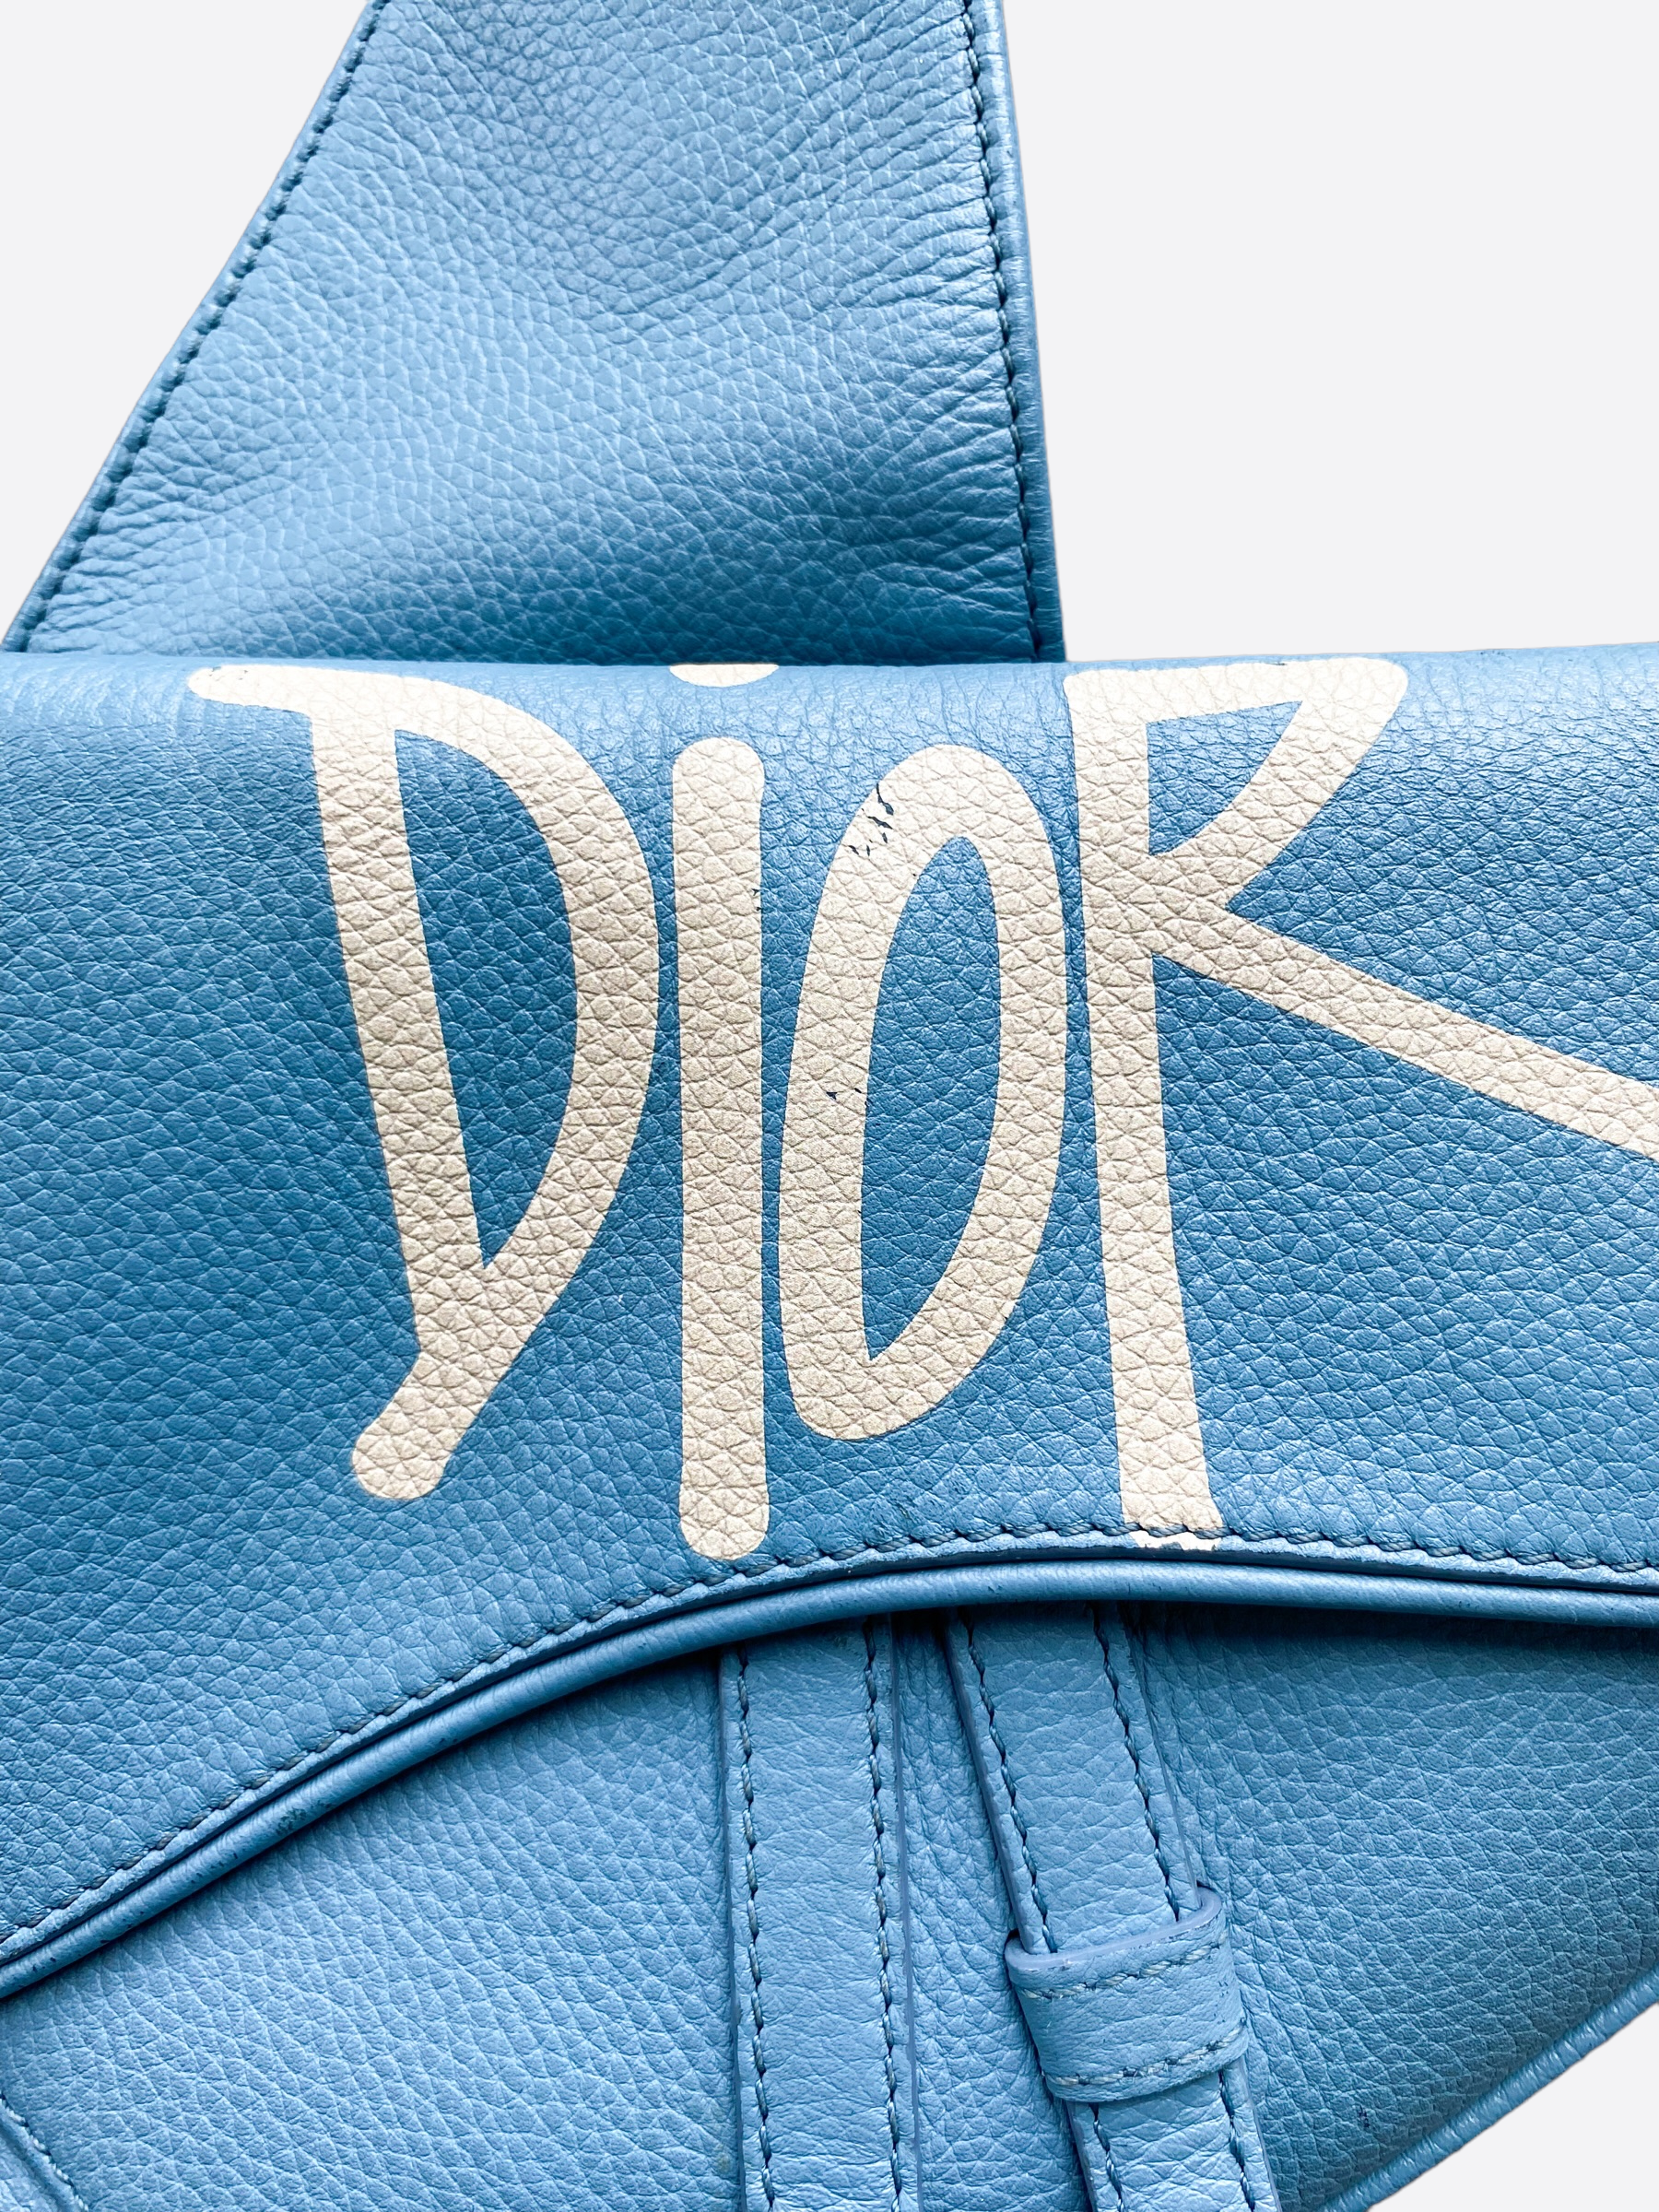 Dior x Stussy Pre-owned Saddle Bag